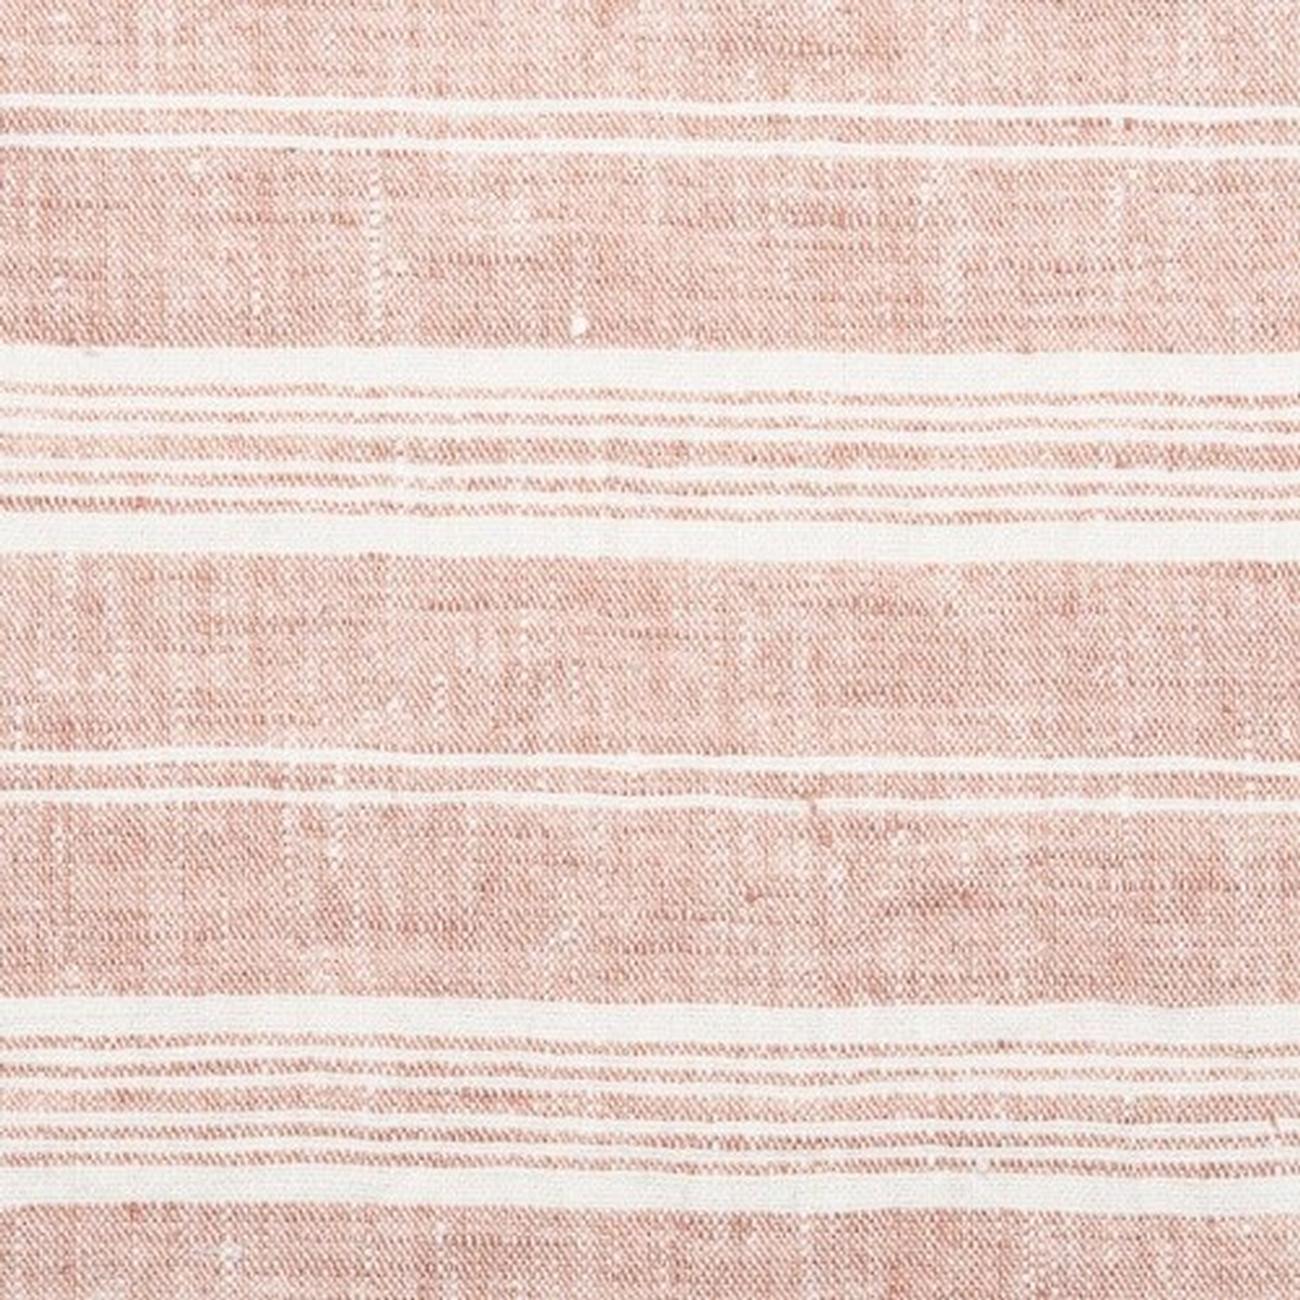 Linenme-multistripe-rosa-43x43-napkin - Multistripe Linen Rosa Napkin